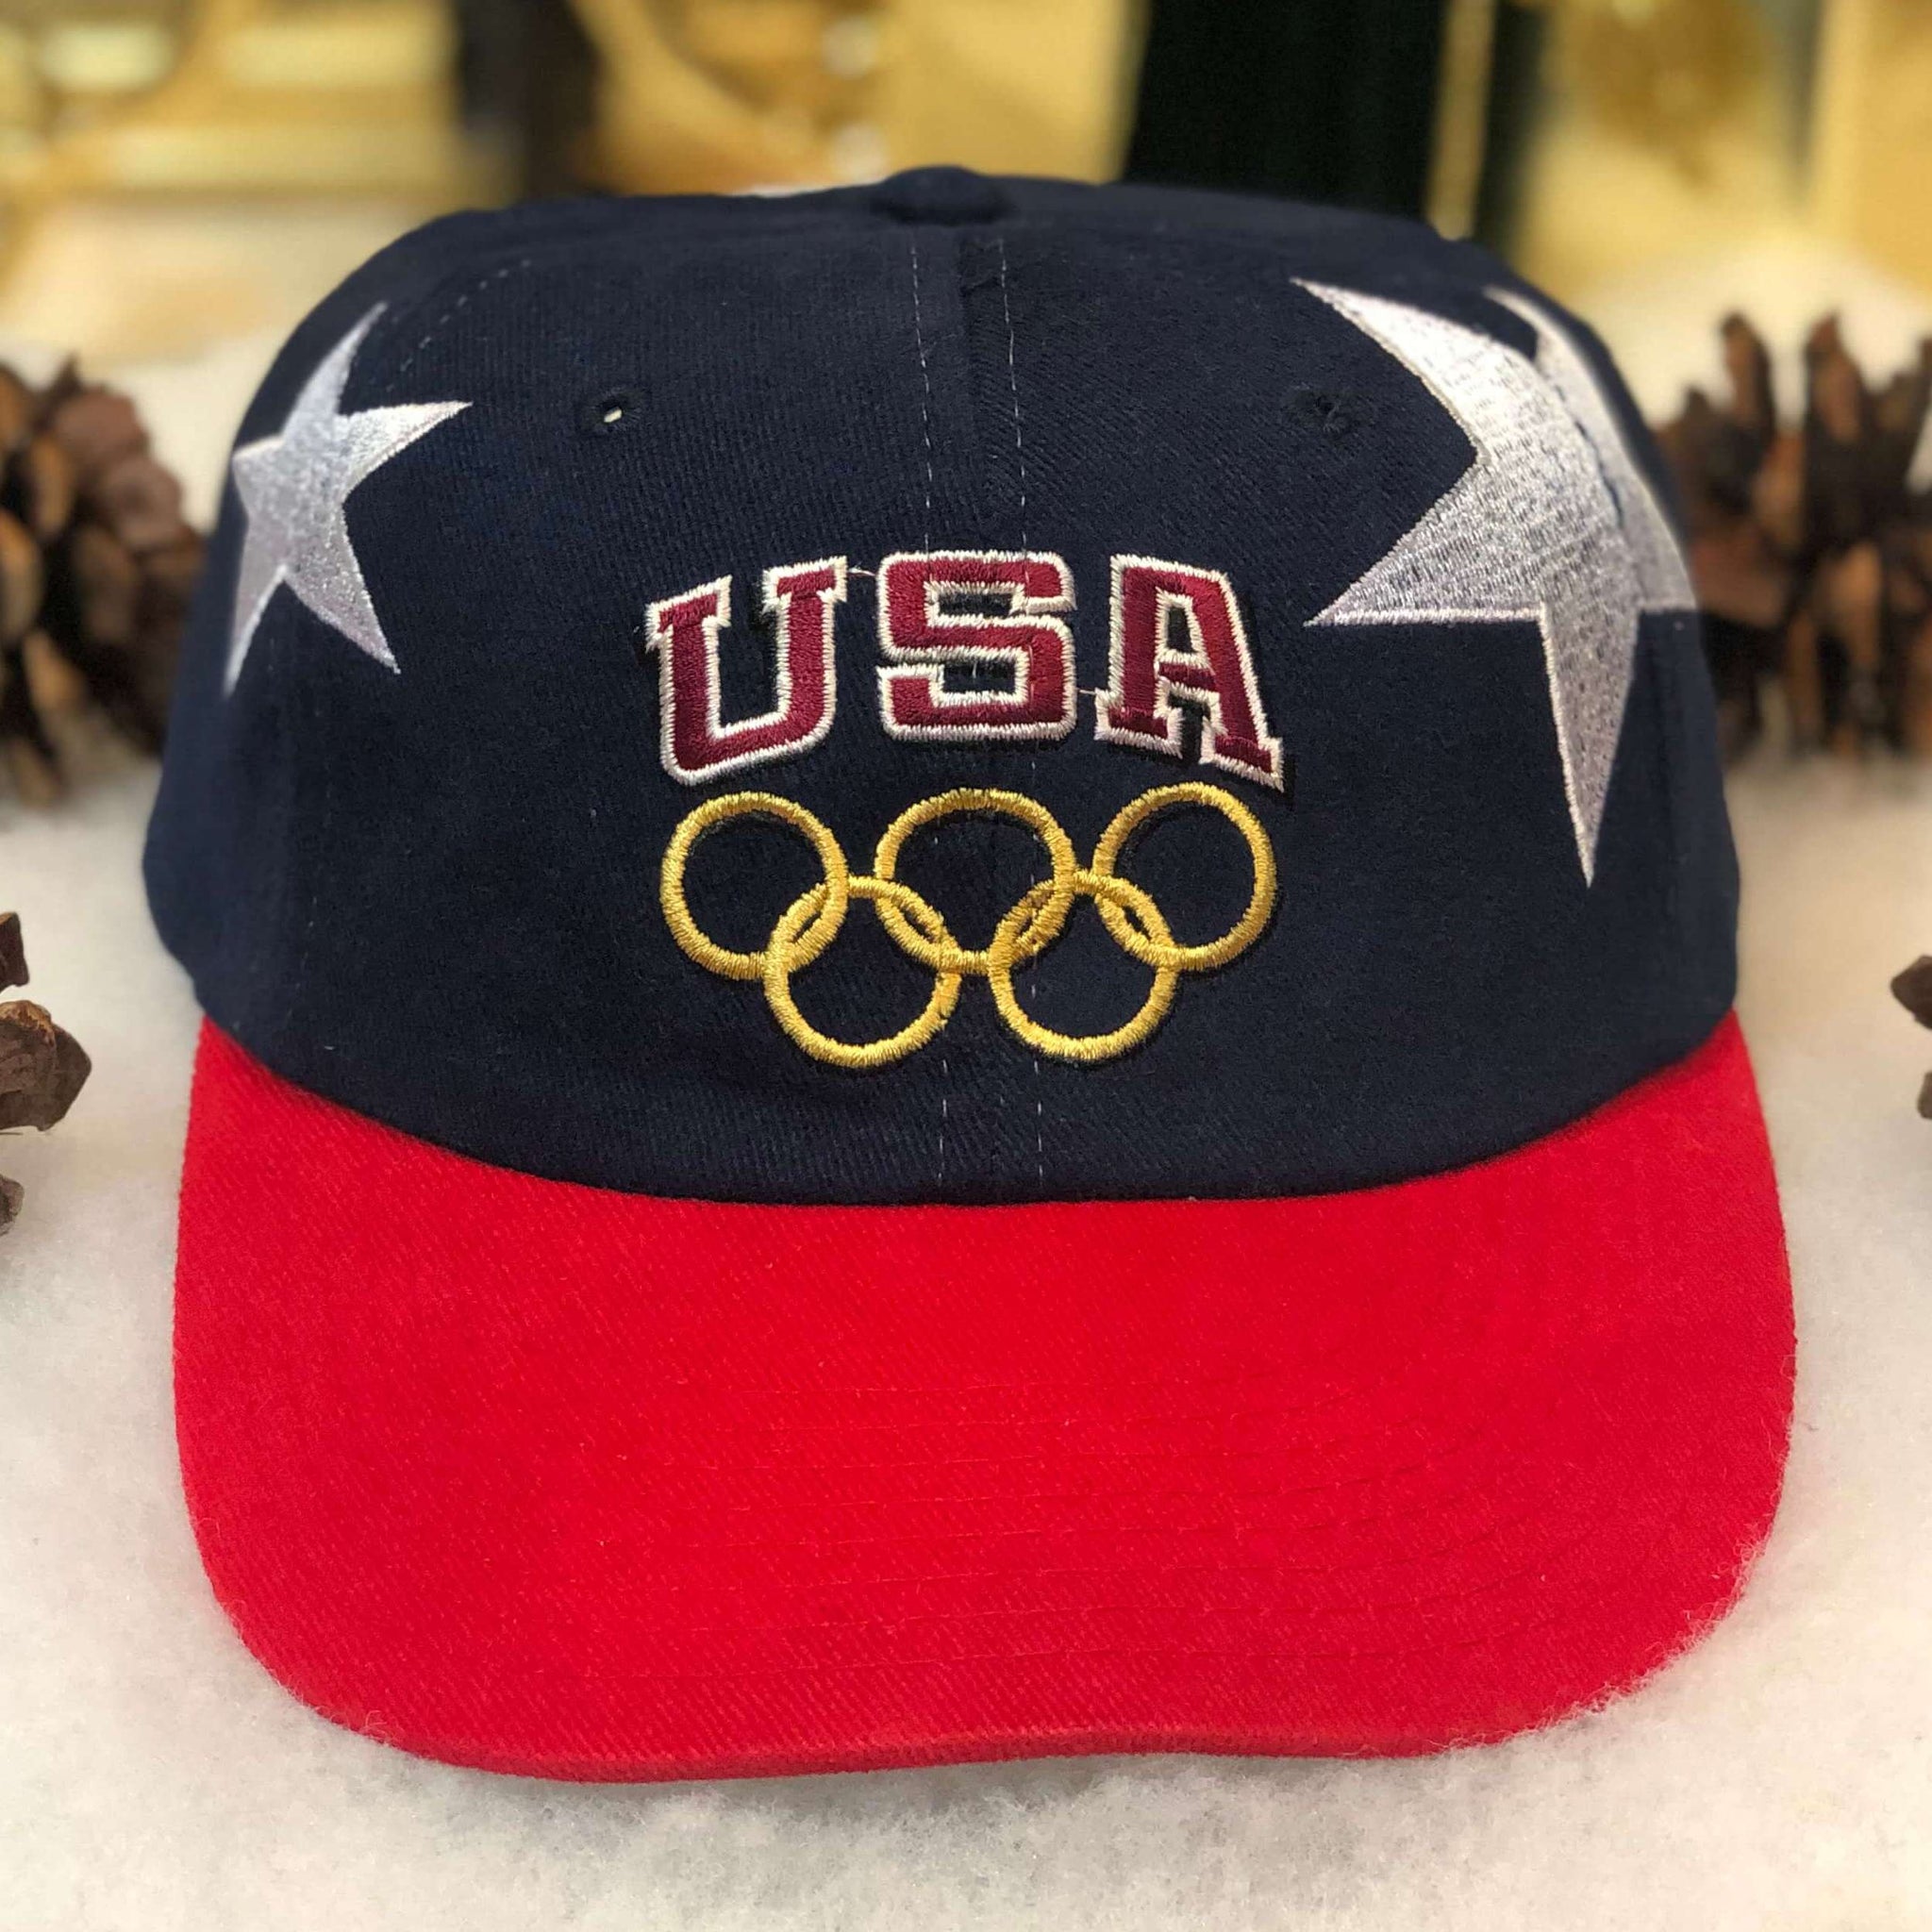 Vintage 1996 USA Olympics Champion Snapback Hat